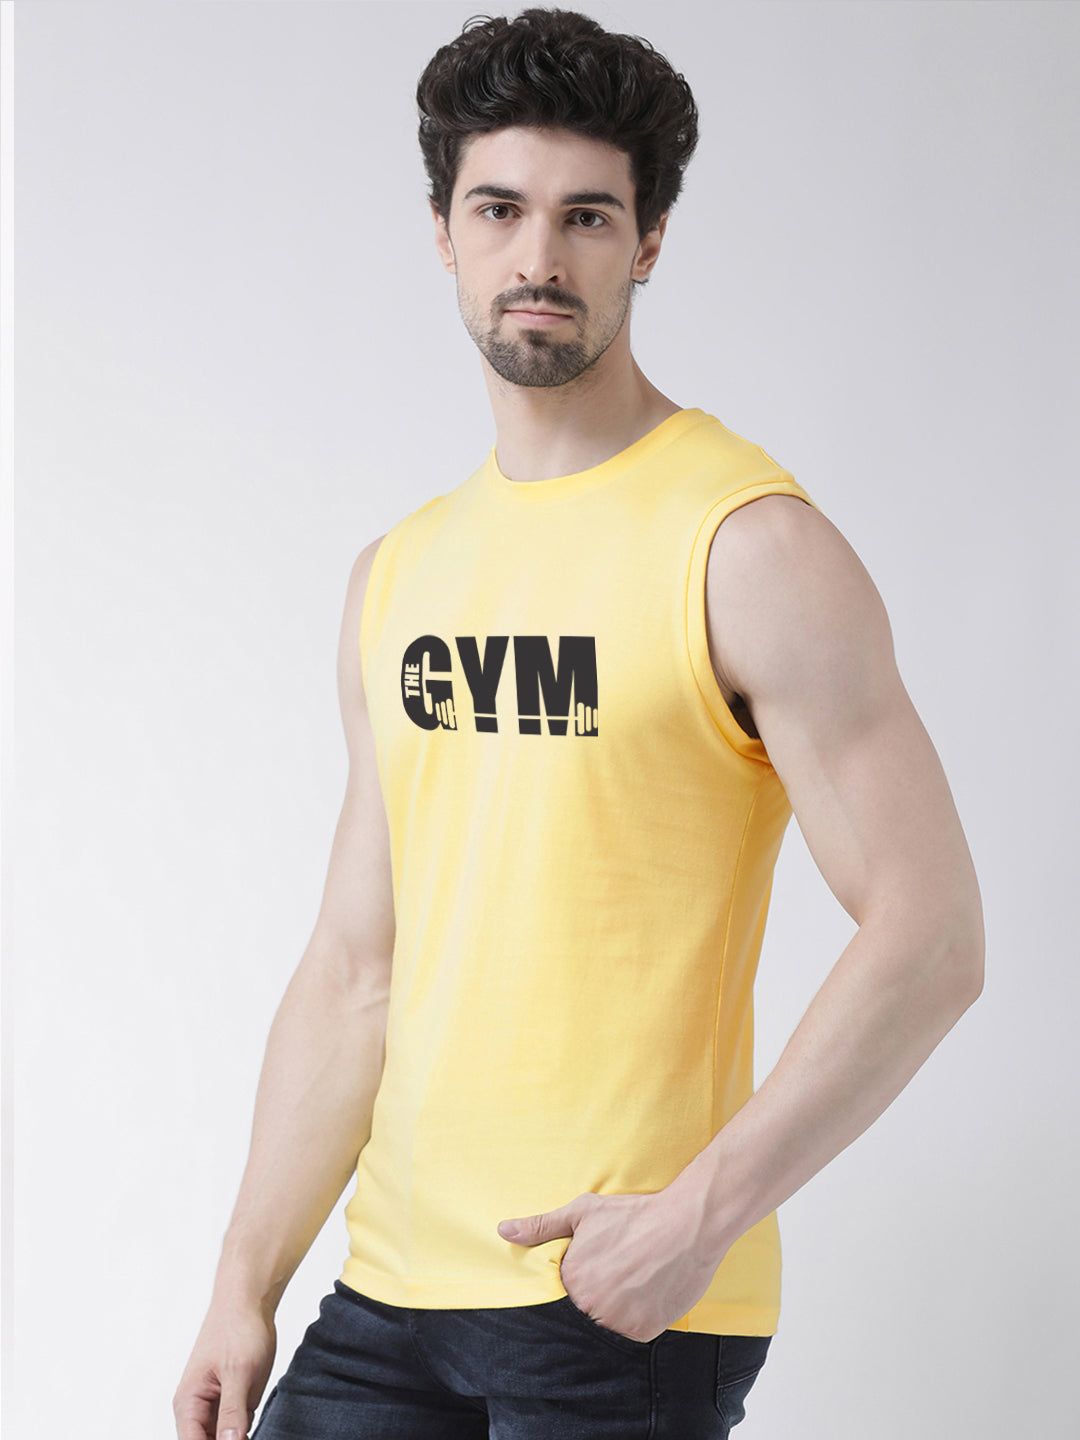 Men Gym Printed Cotton Gym Vest - Friskers